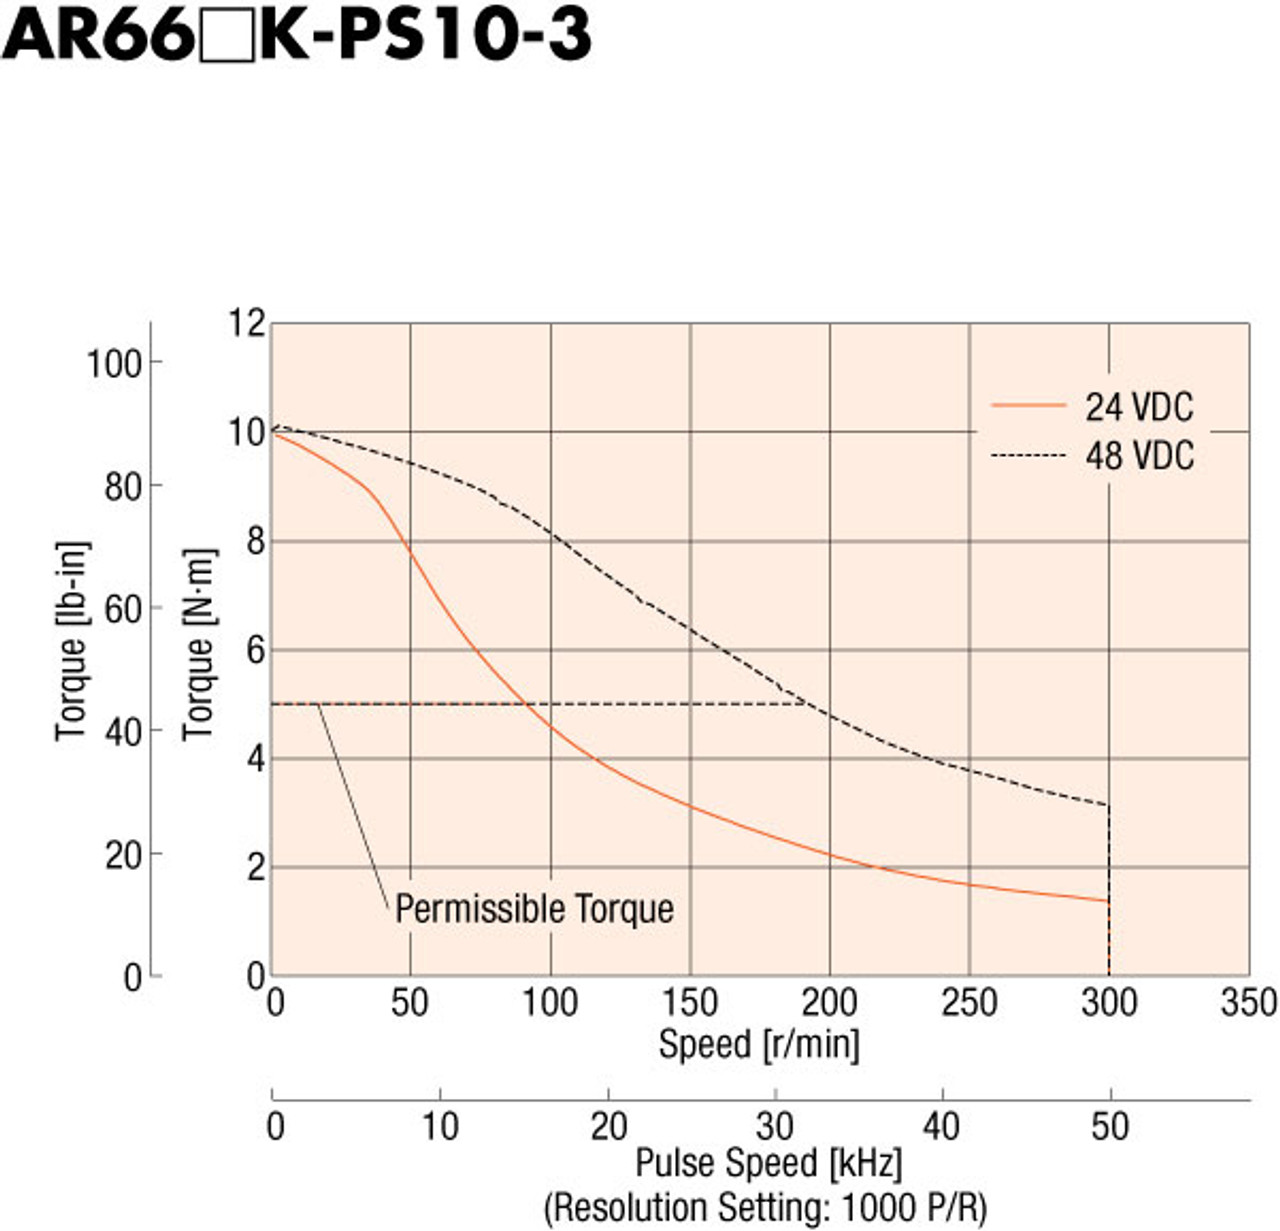 AR66MKD-PS10-3 - Speed-Torque